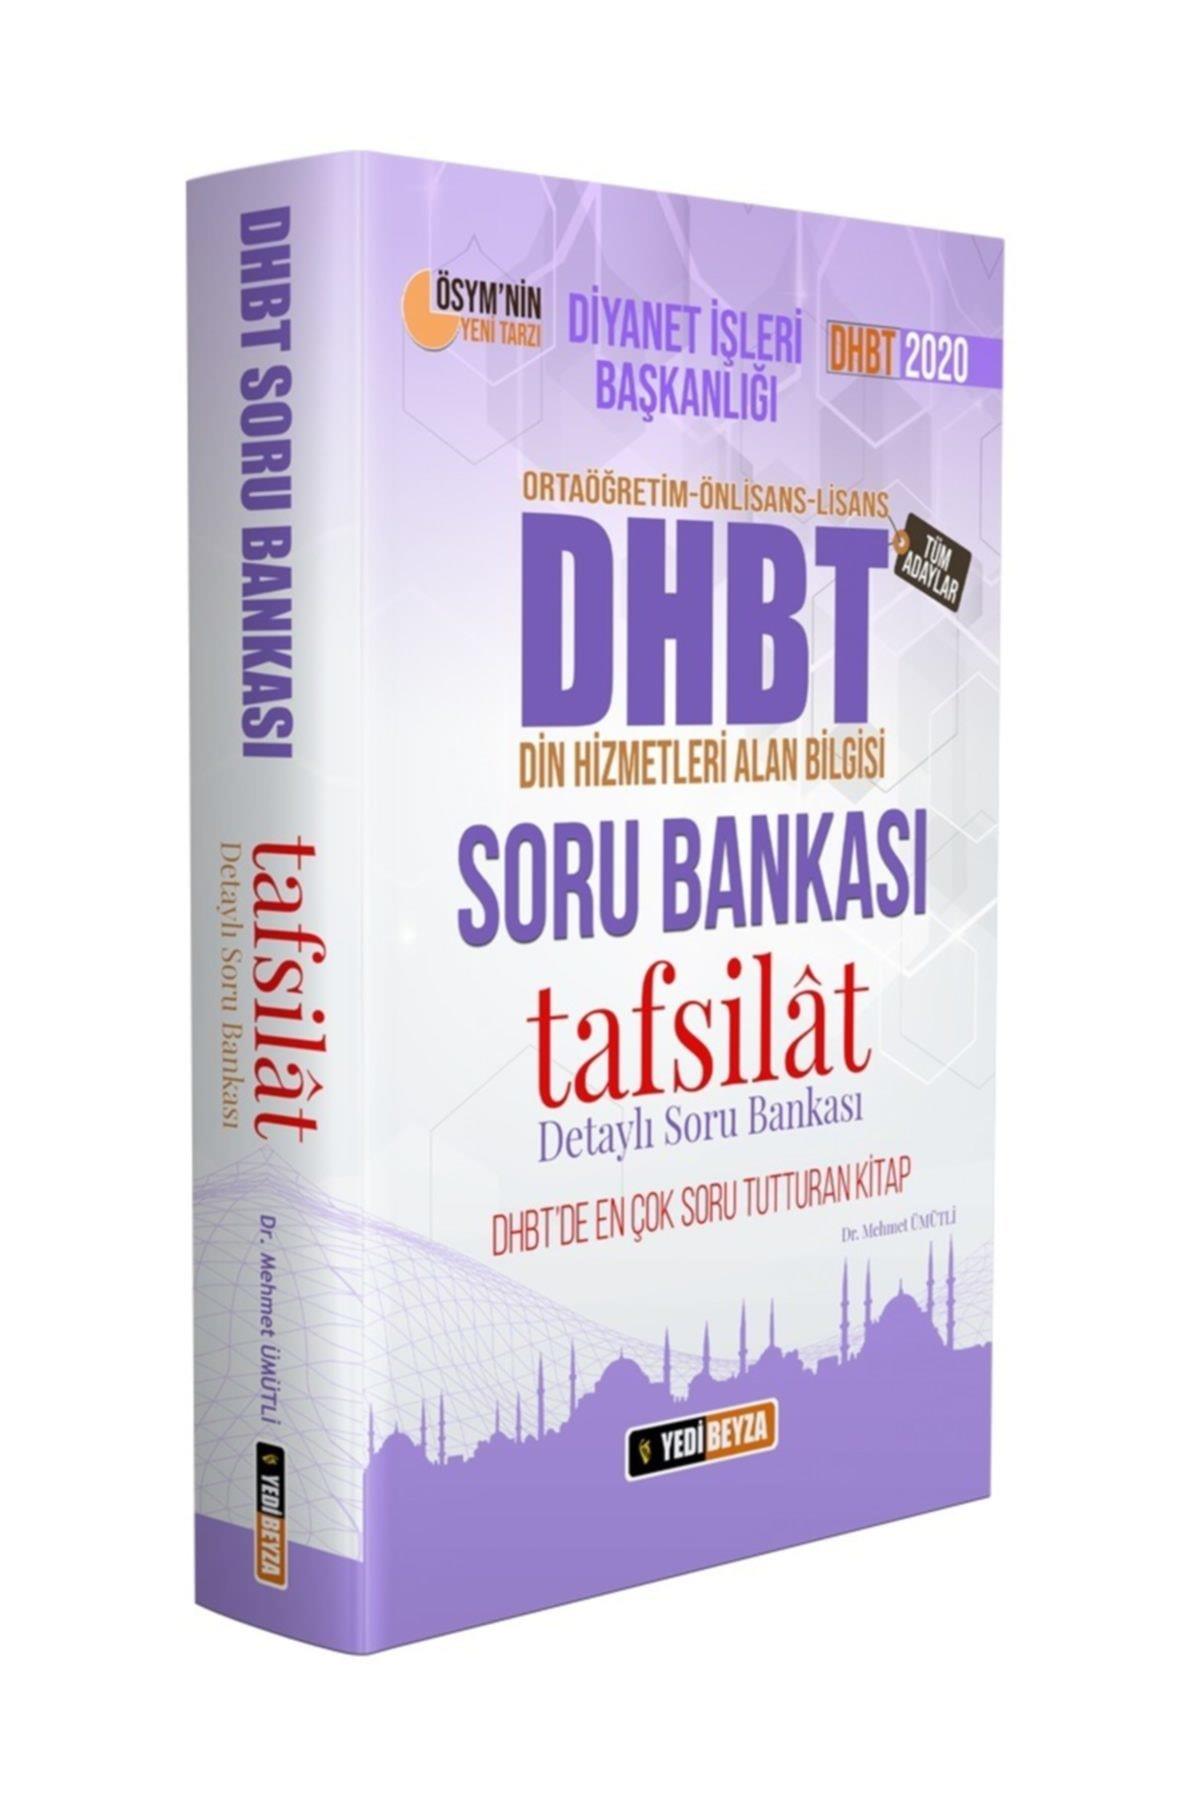 7 Beyza Yayınları 2020 Dhbt Tafsilat Serisi Tüm Adaylar Soru Bank